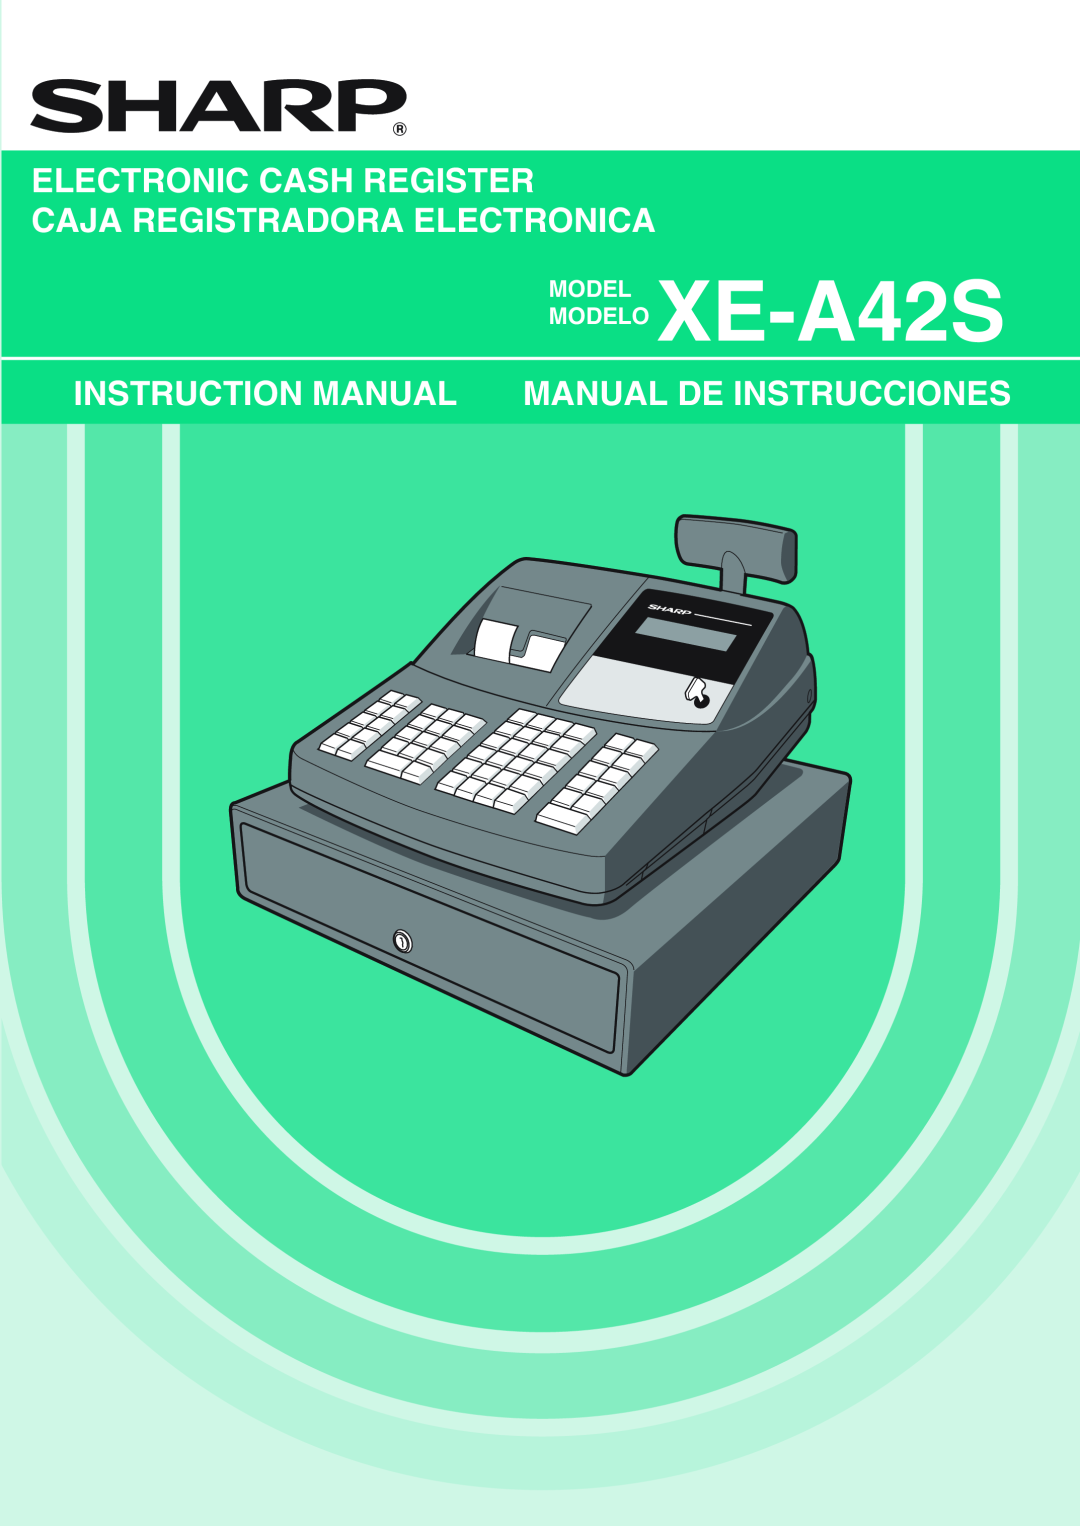 Sharp instruction manual Electronic Cash Register Caja Registradora Electronica, MODEL MODELO XE-A42S 